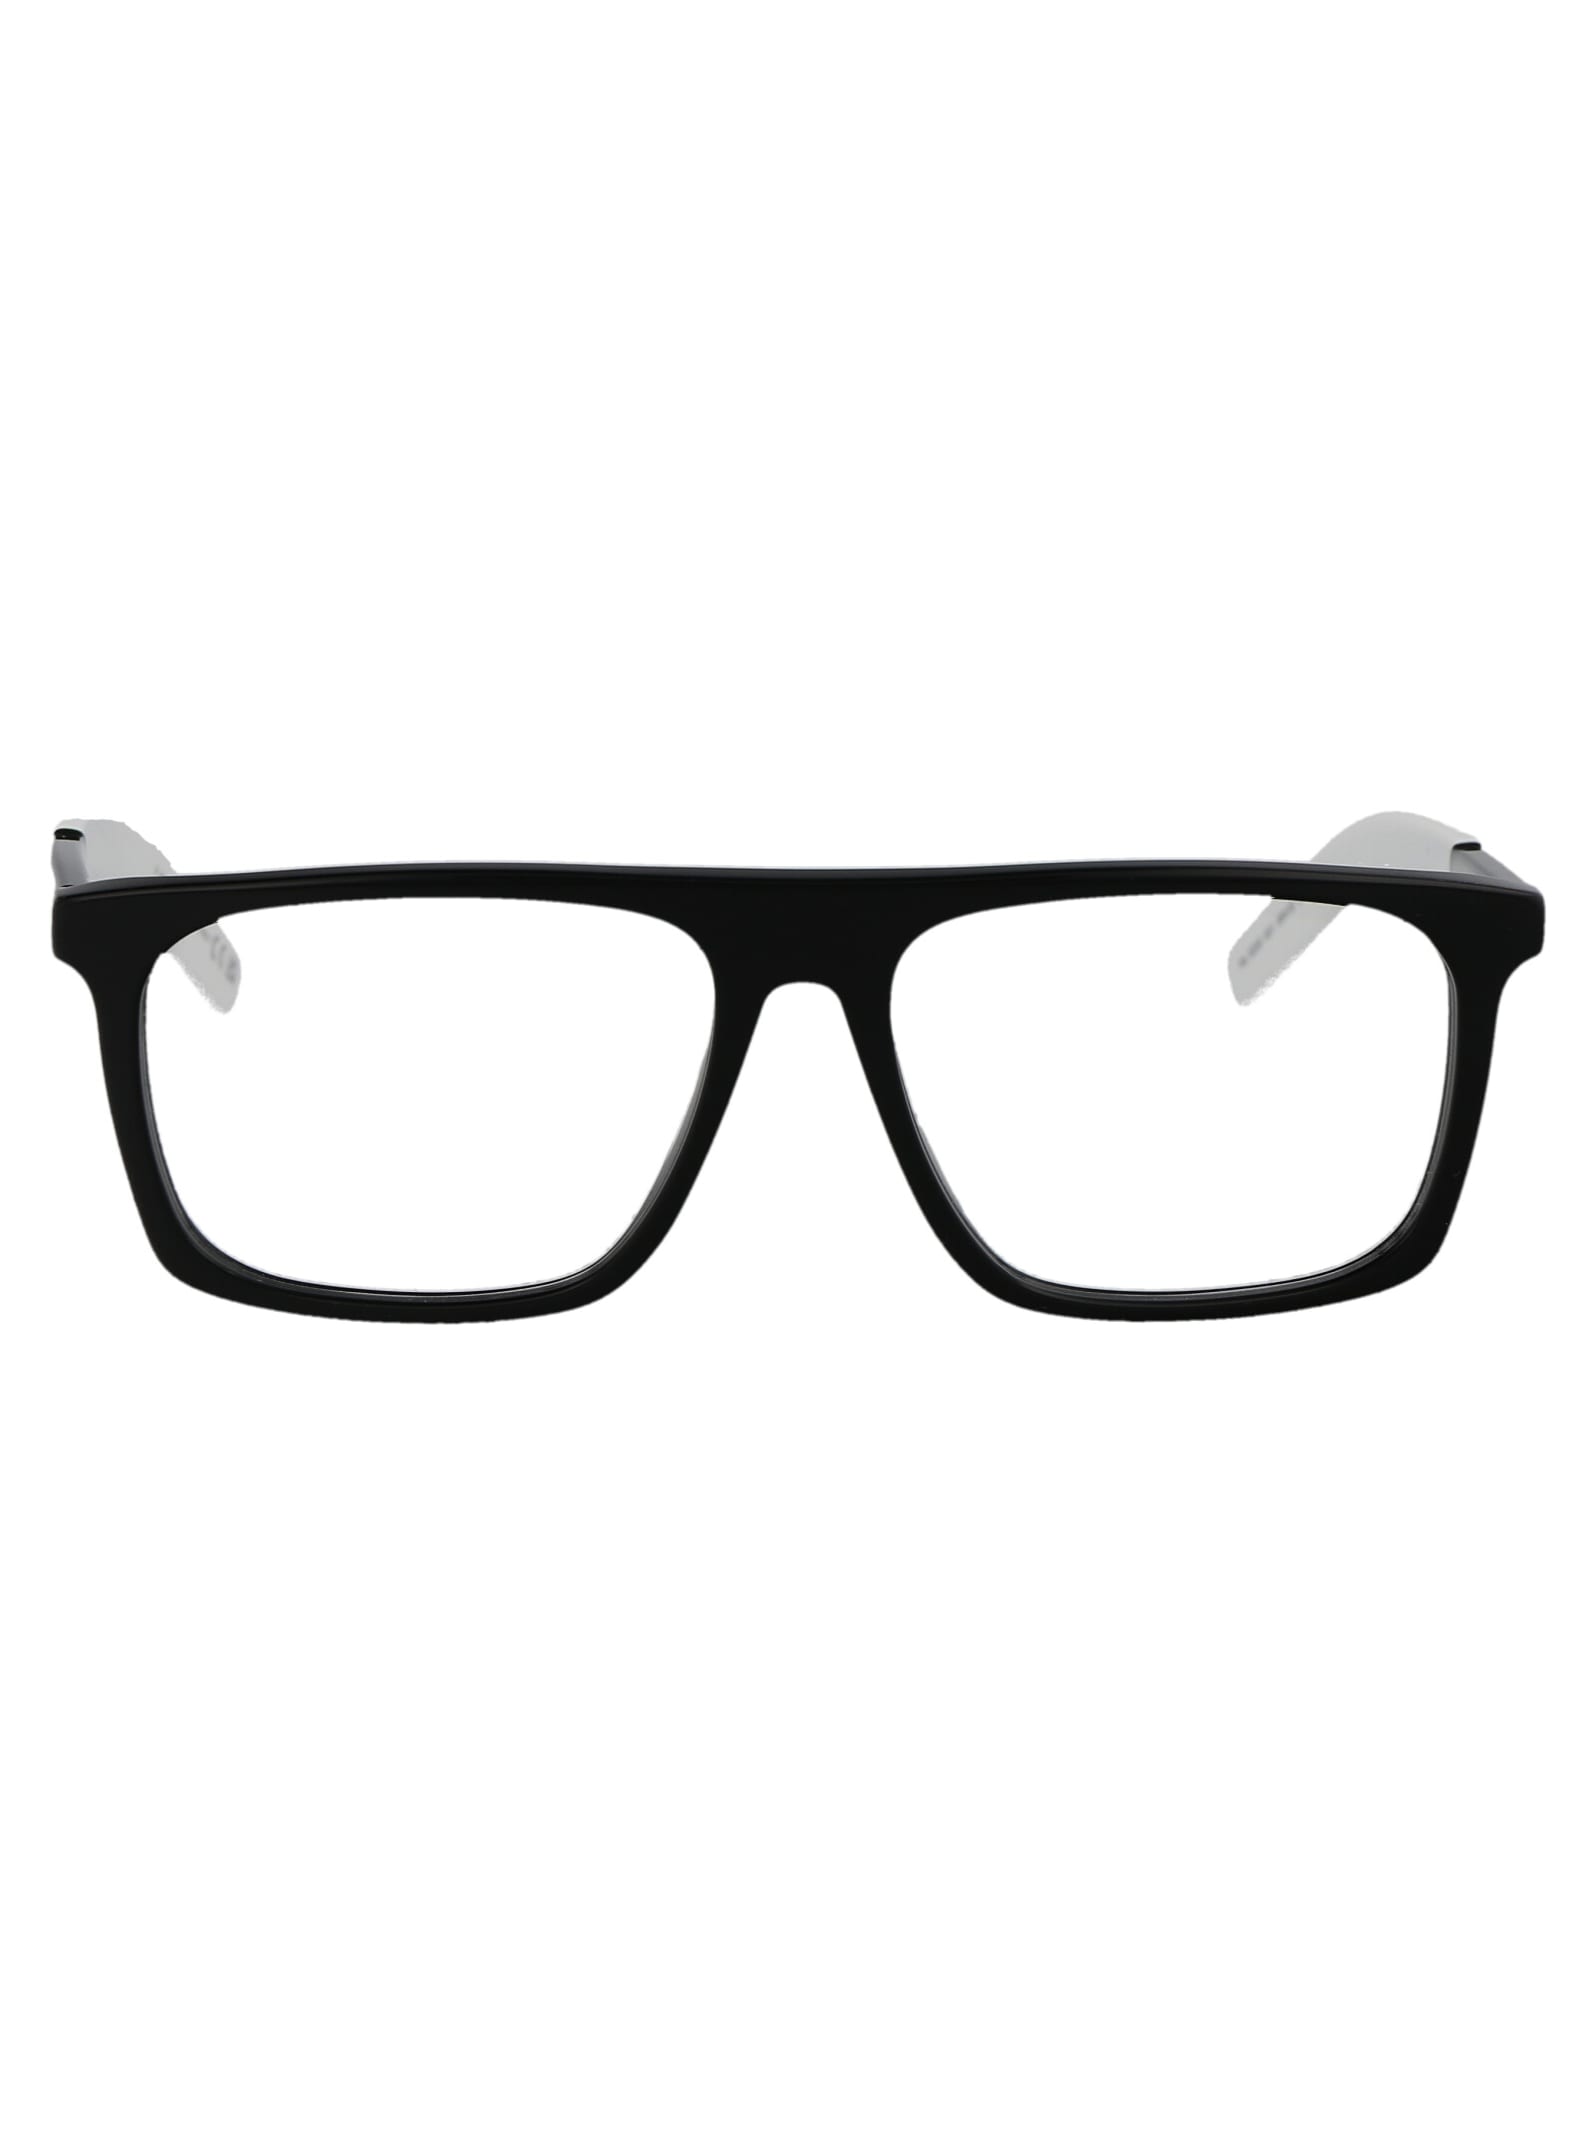 Ml5206 Glasses